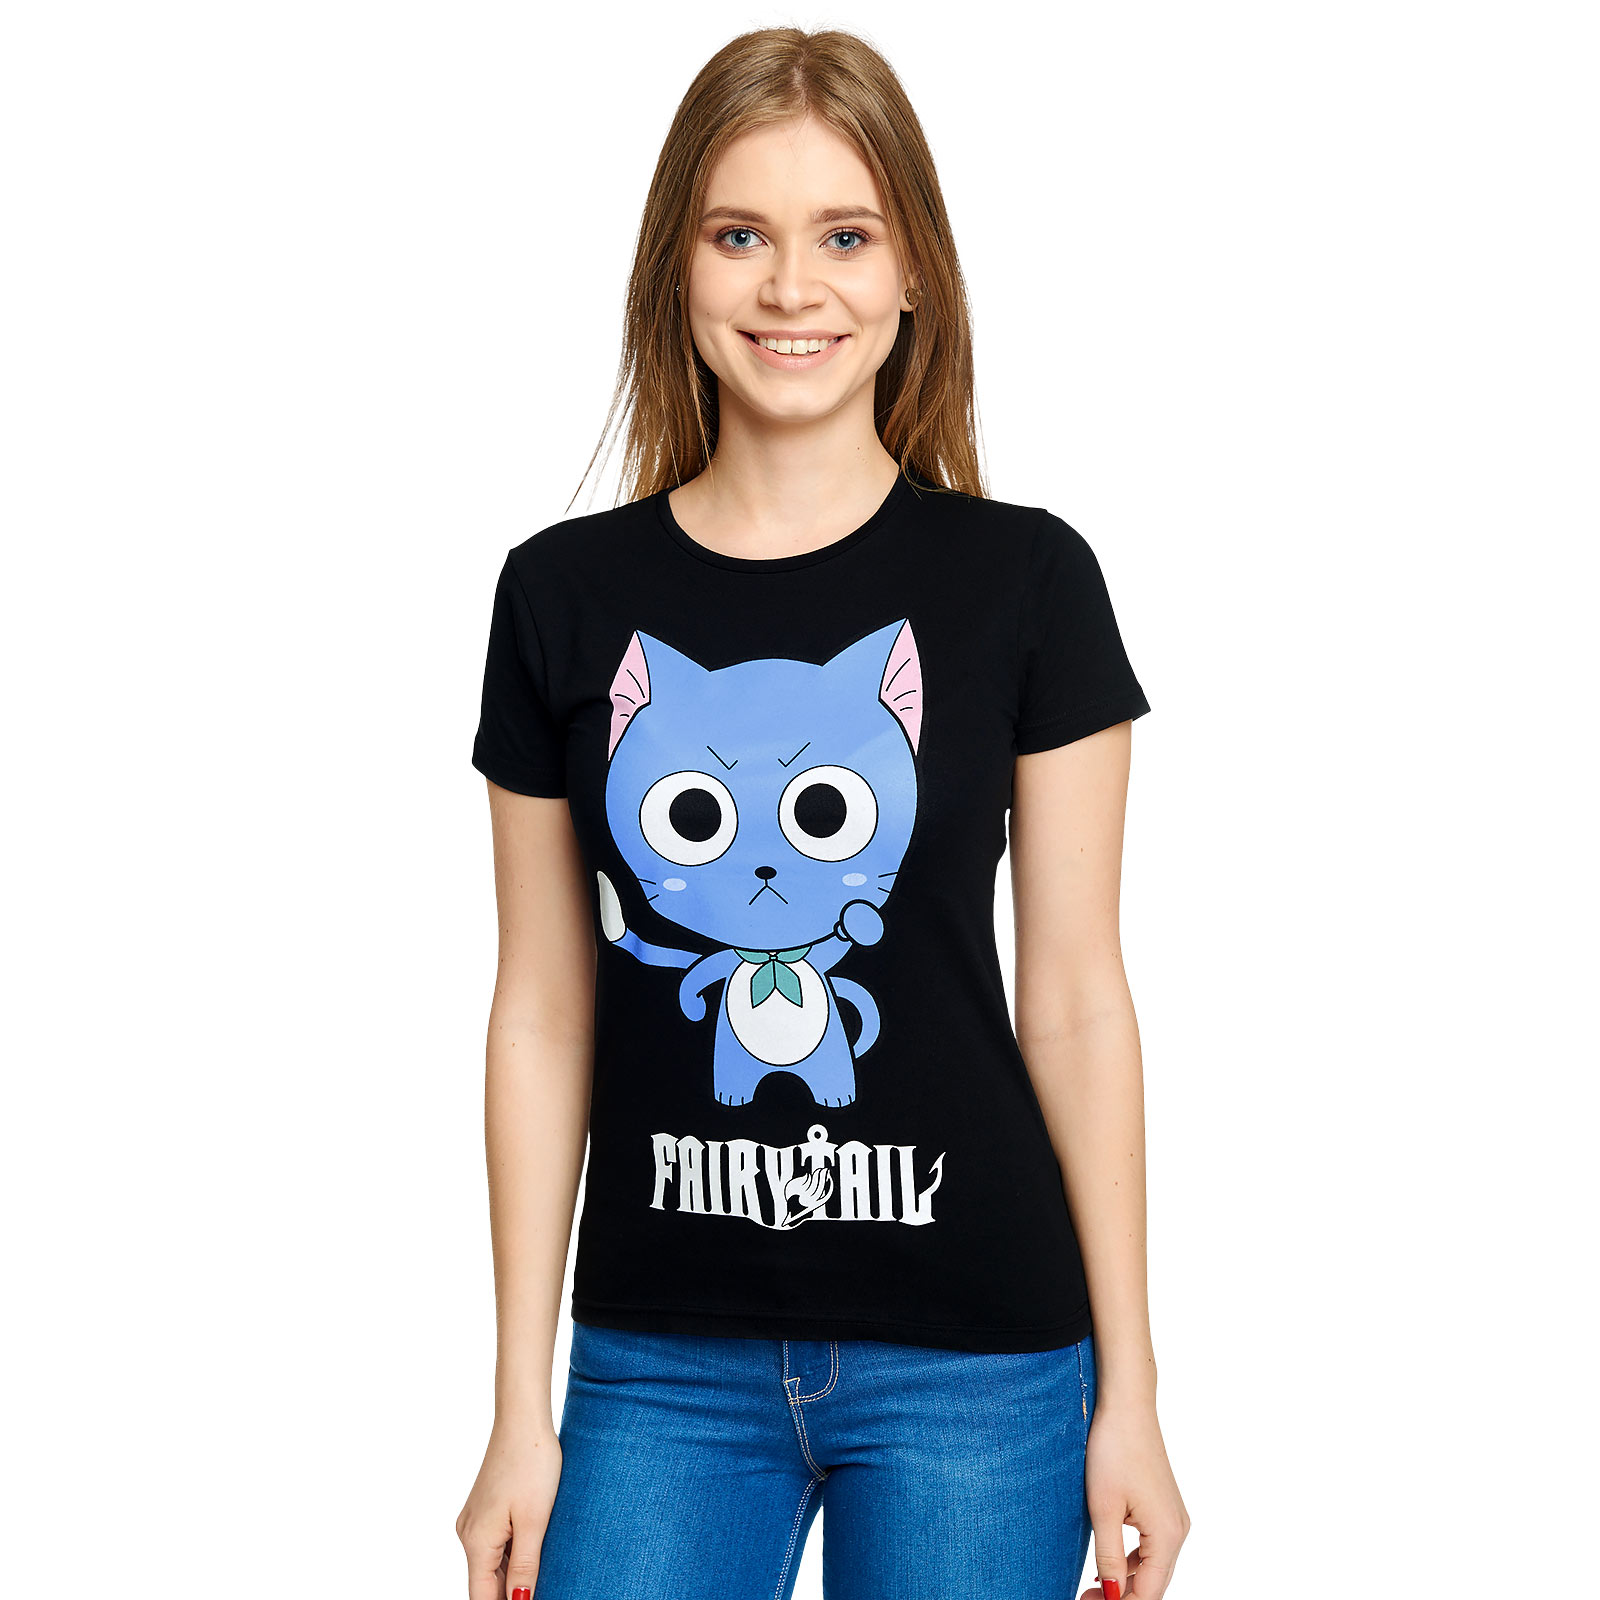 Fairy Tail - Happy T-Shirt Damen schwarz